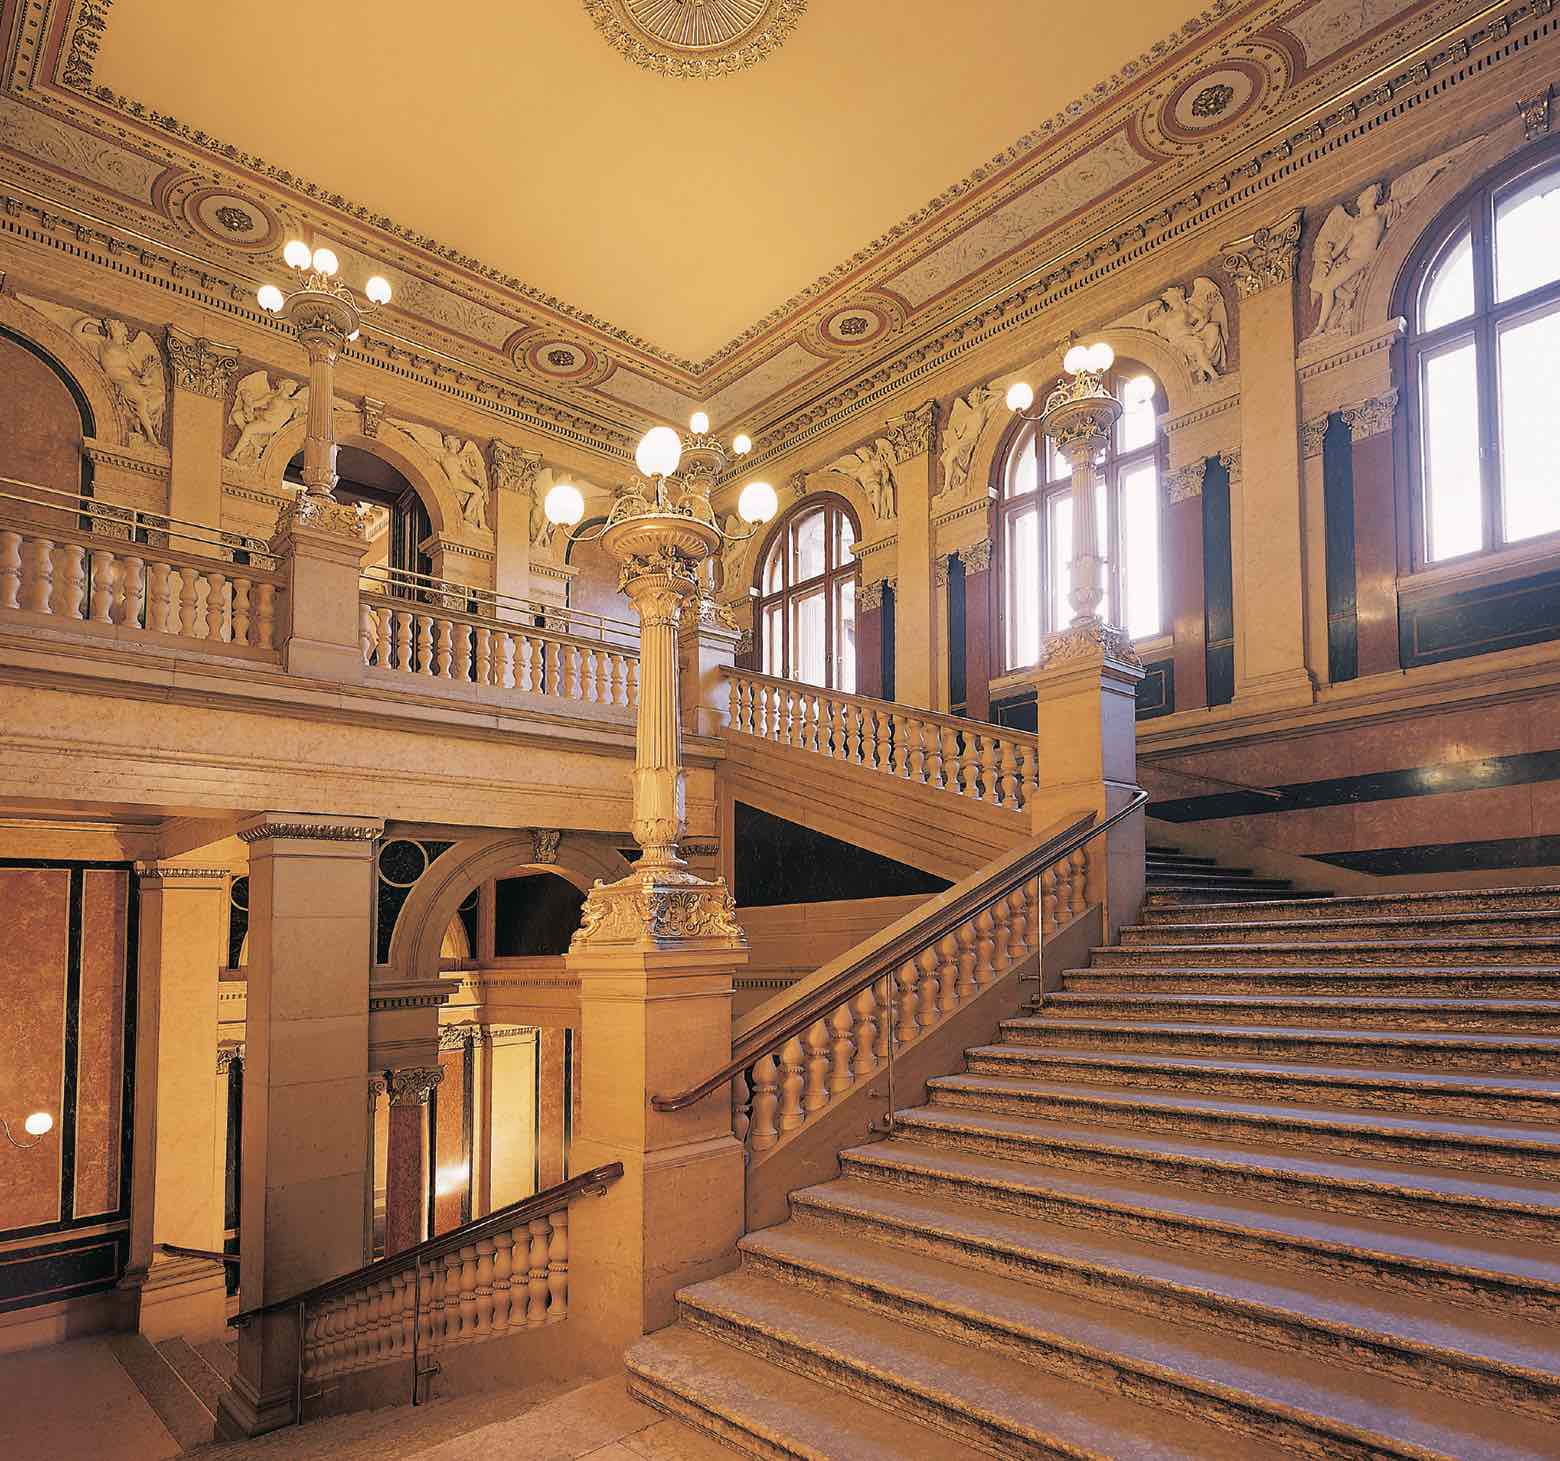 Der Stiegenaufgang zum Festsaal des Palais alte Börse